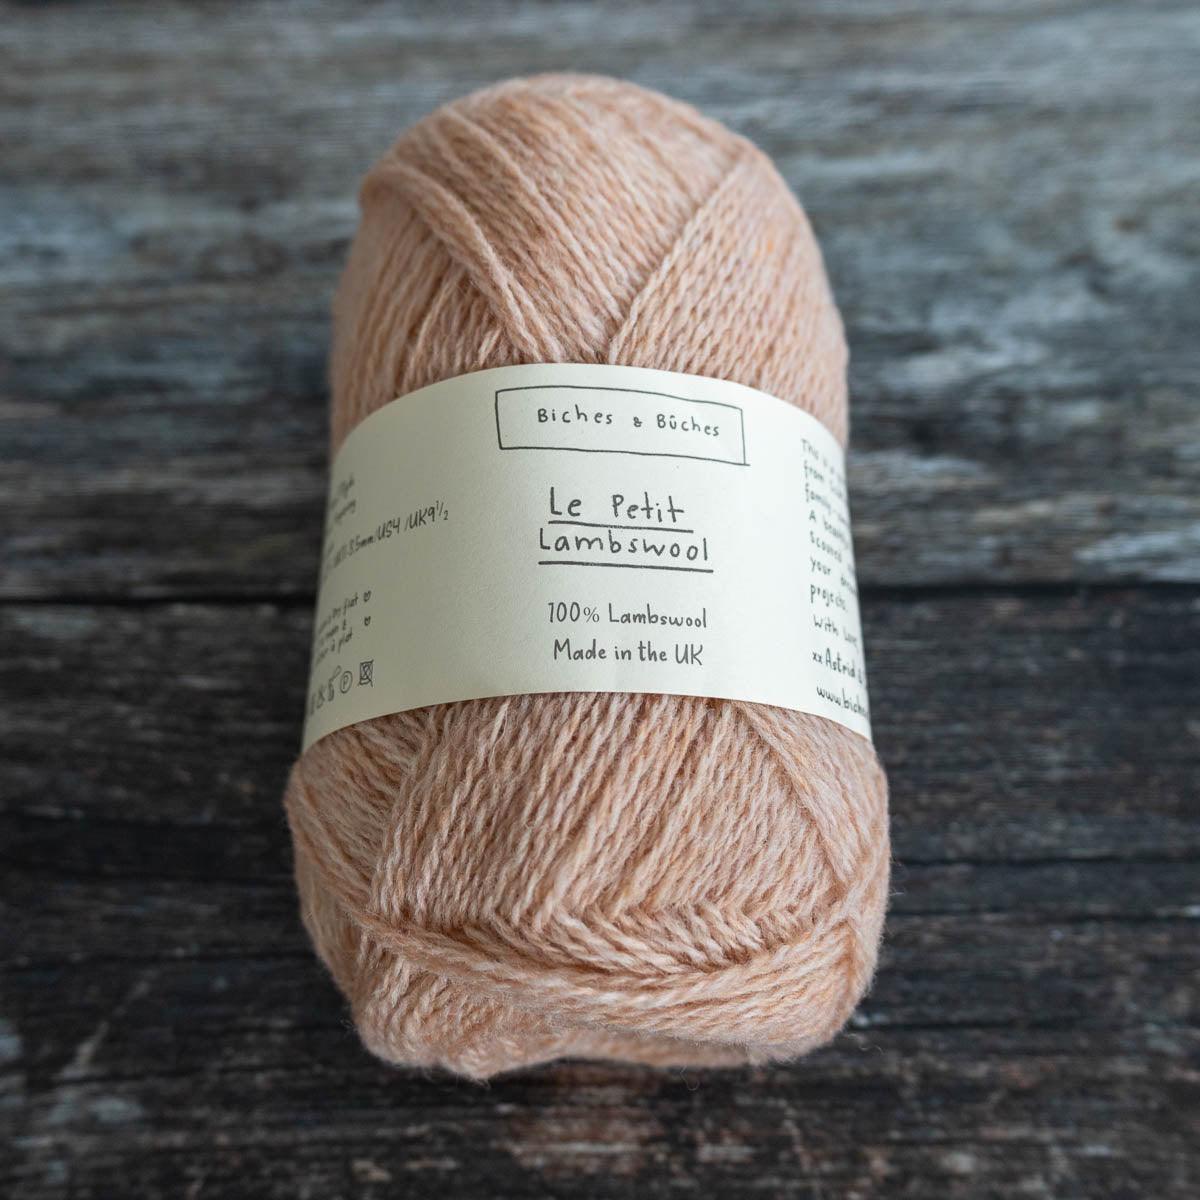 Biches & Bûches Biches & Bûches Le Petit Lambswool - Light Peach - 4ply Knitting Yarn